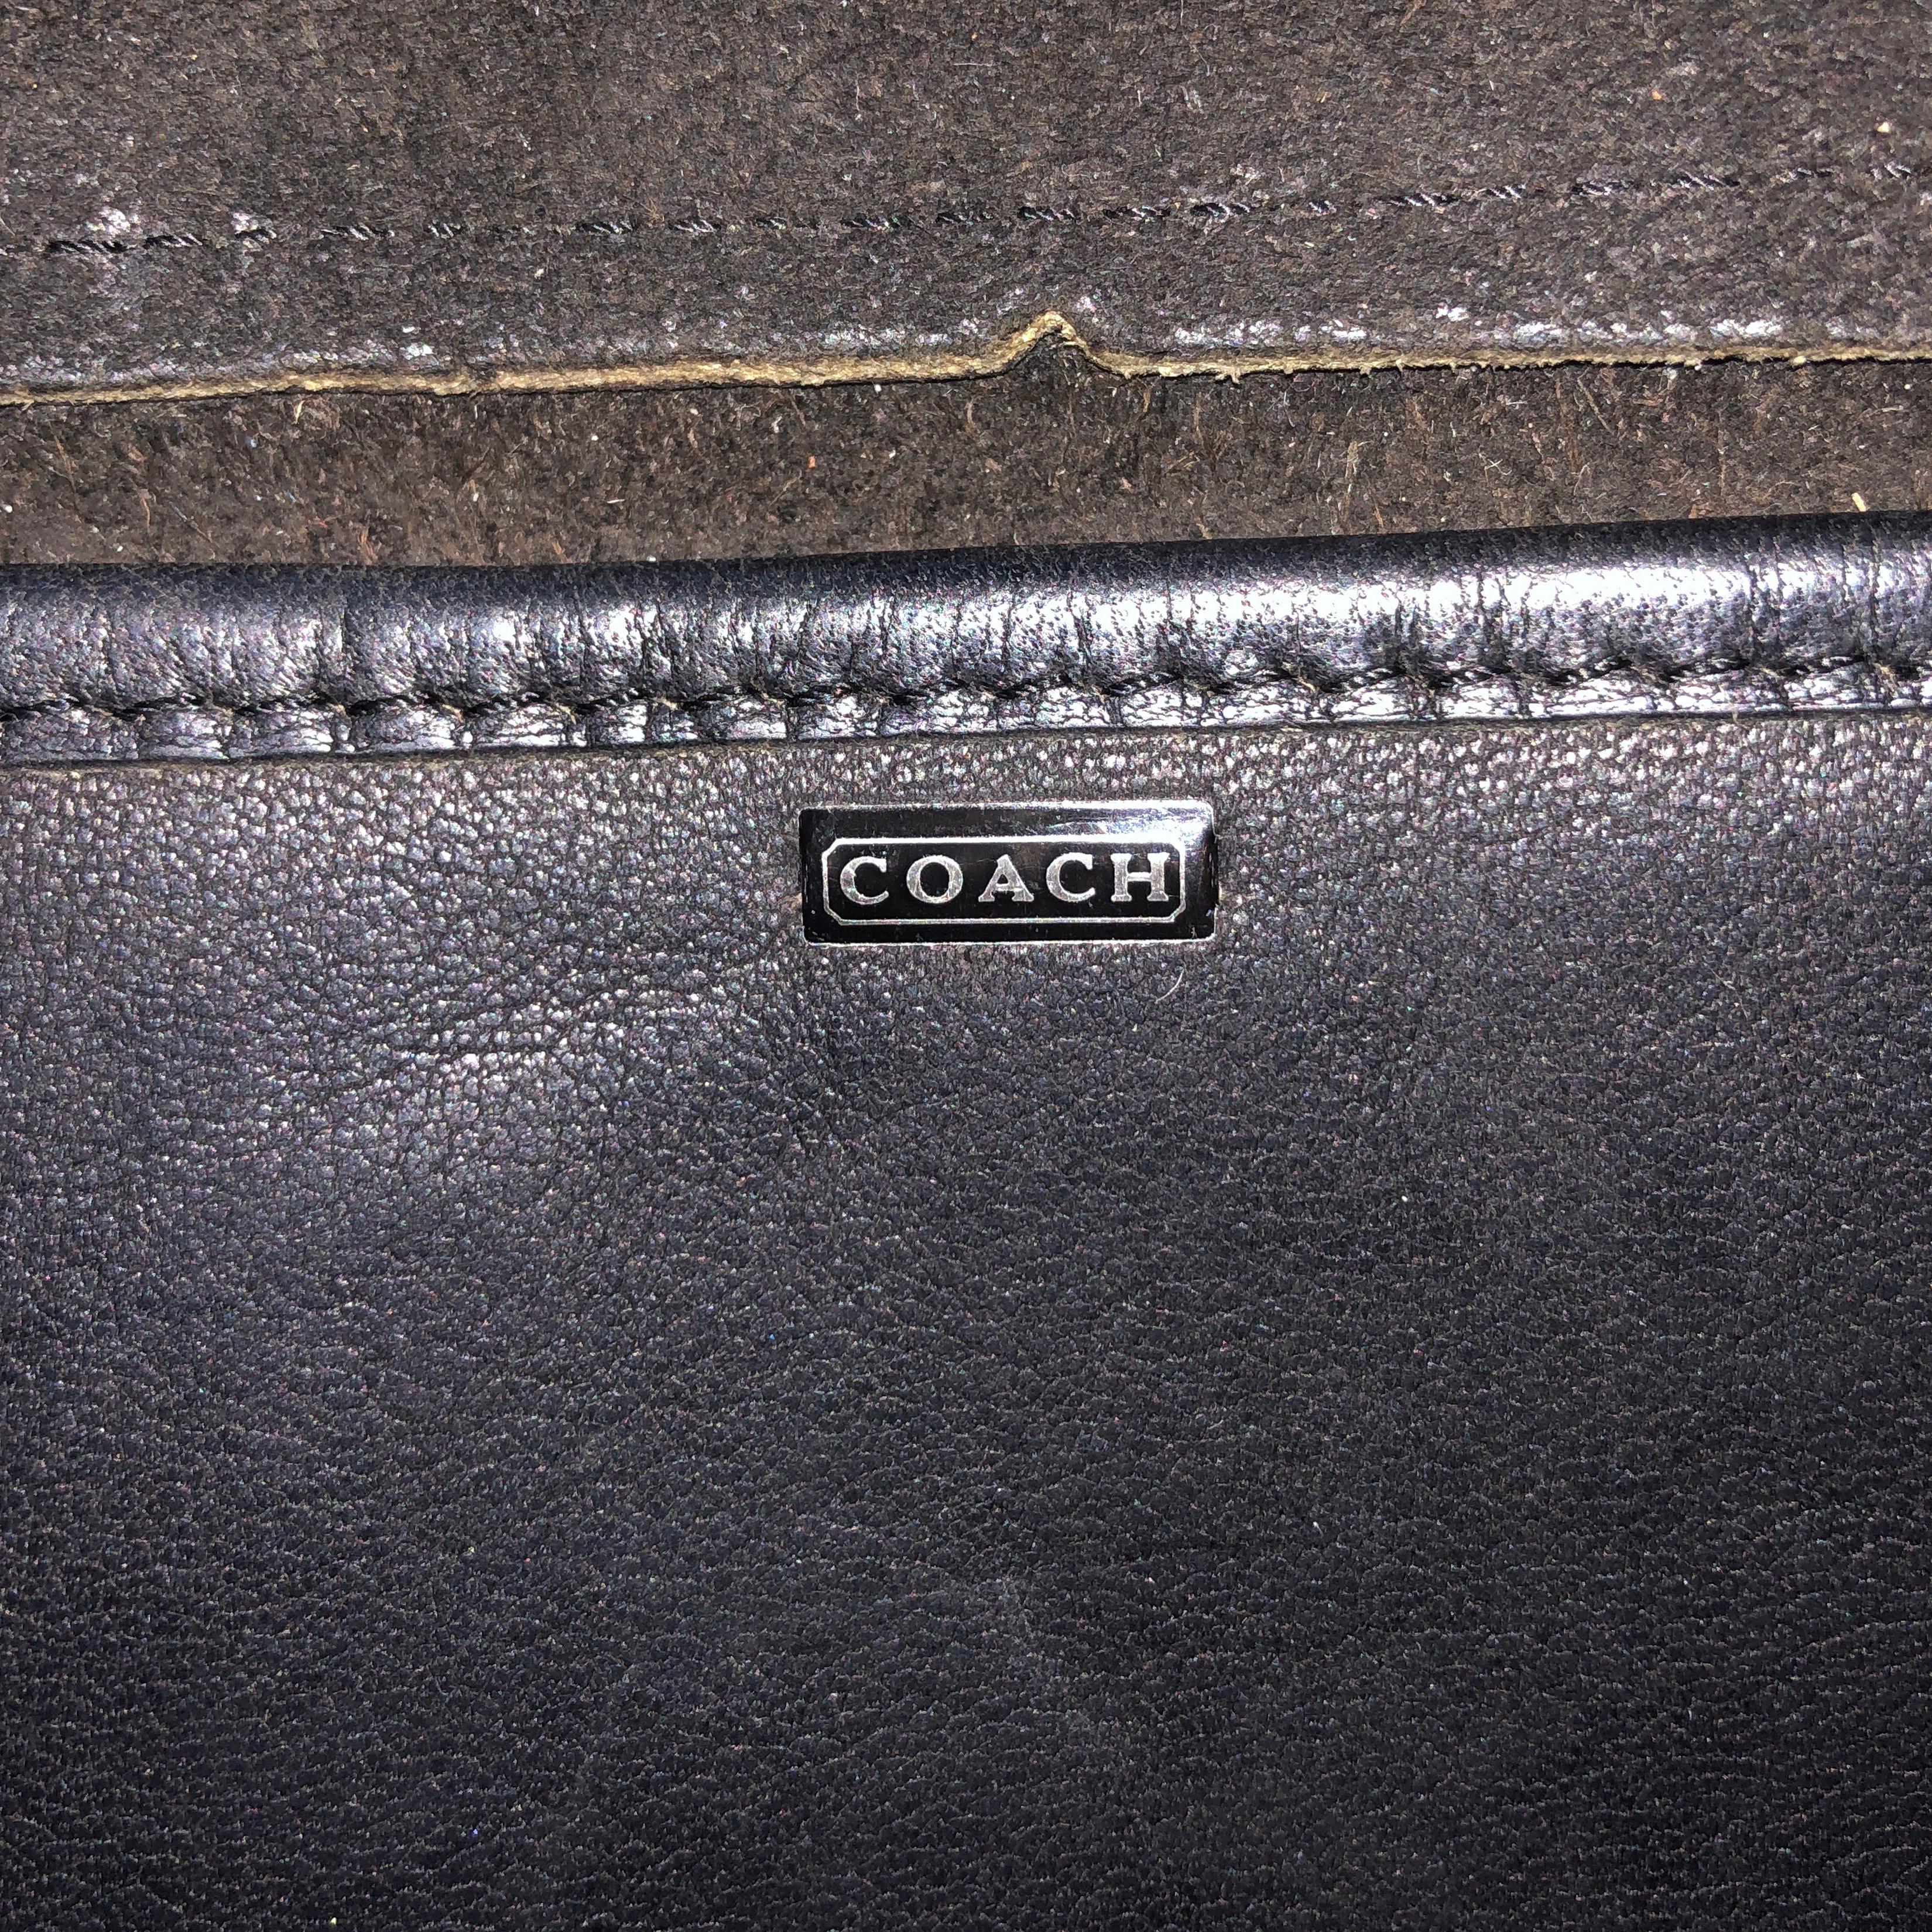 Vintage Bonnie Cashin Coach Courier Bag with Double Front Flaps Rare 60s NYC Bag 5